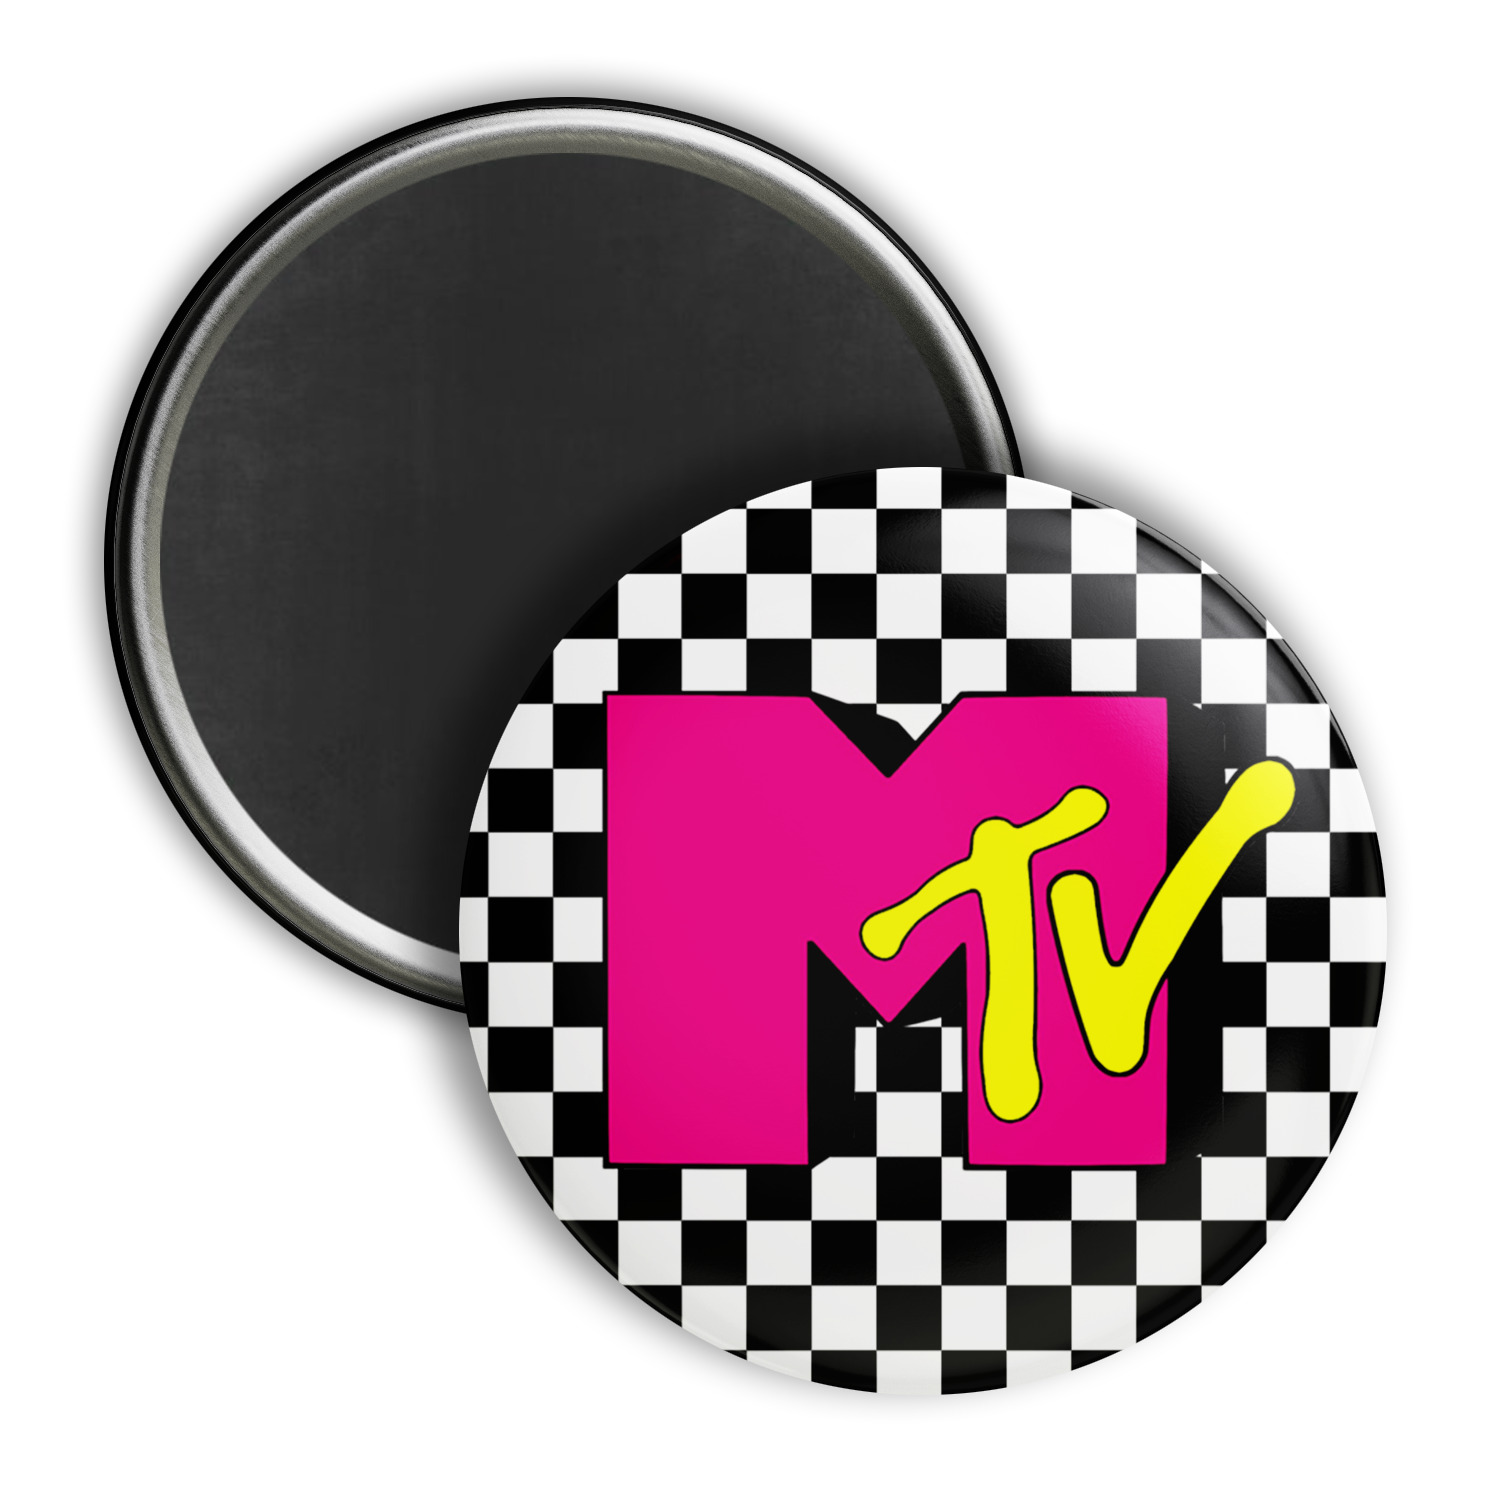 MTV Magnet, New 2.25 inch, Retro Design, Throwback, 1980s, 1990s, Refrigerator